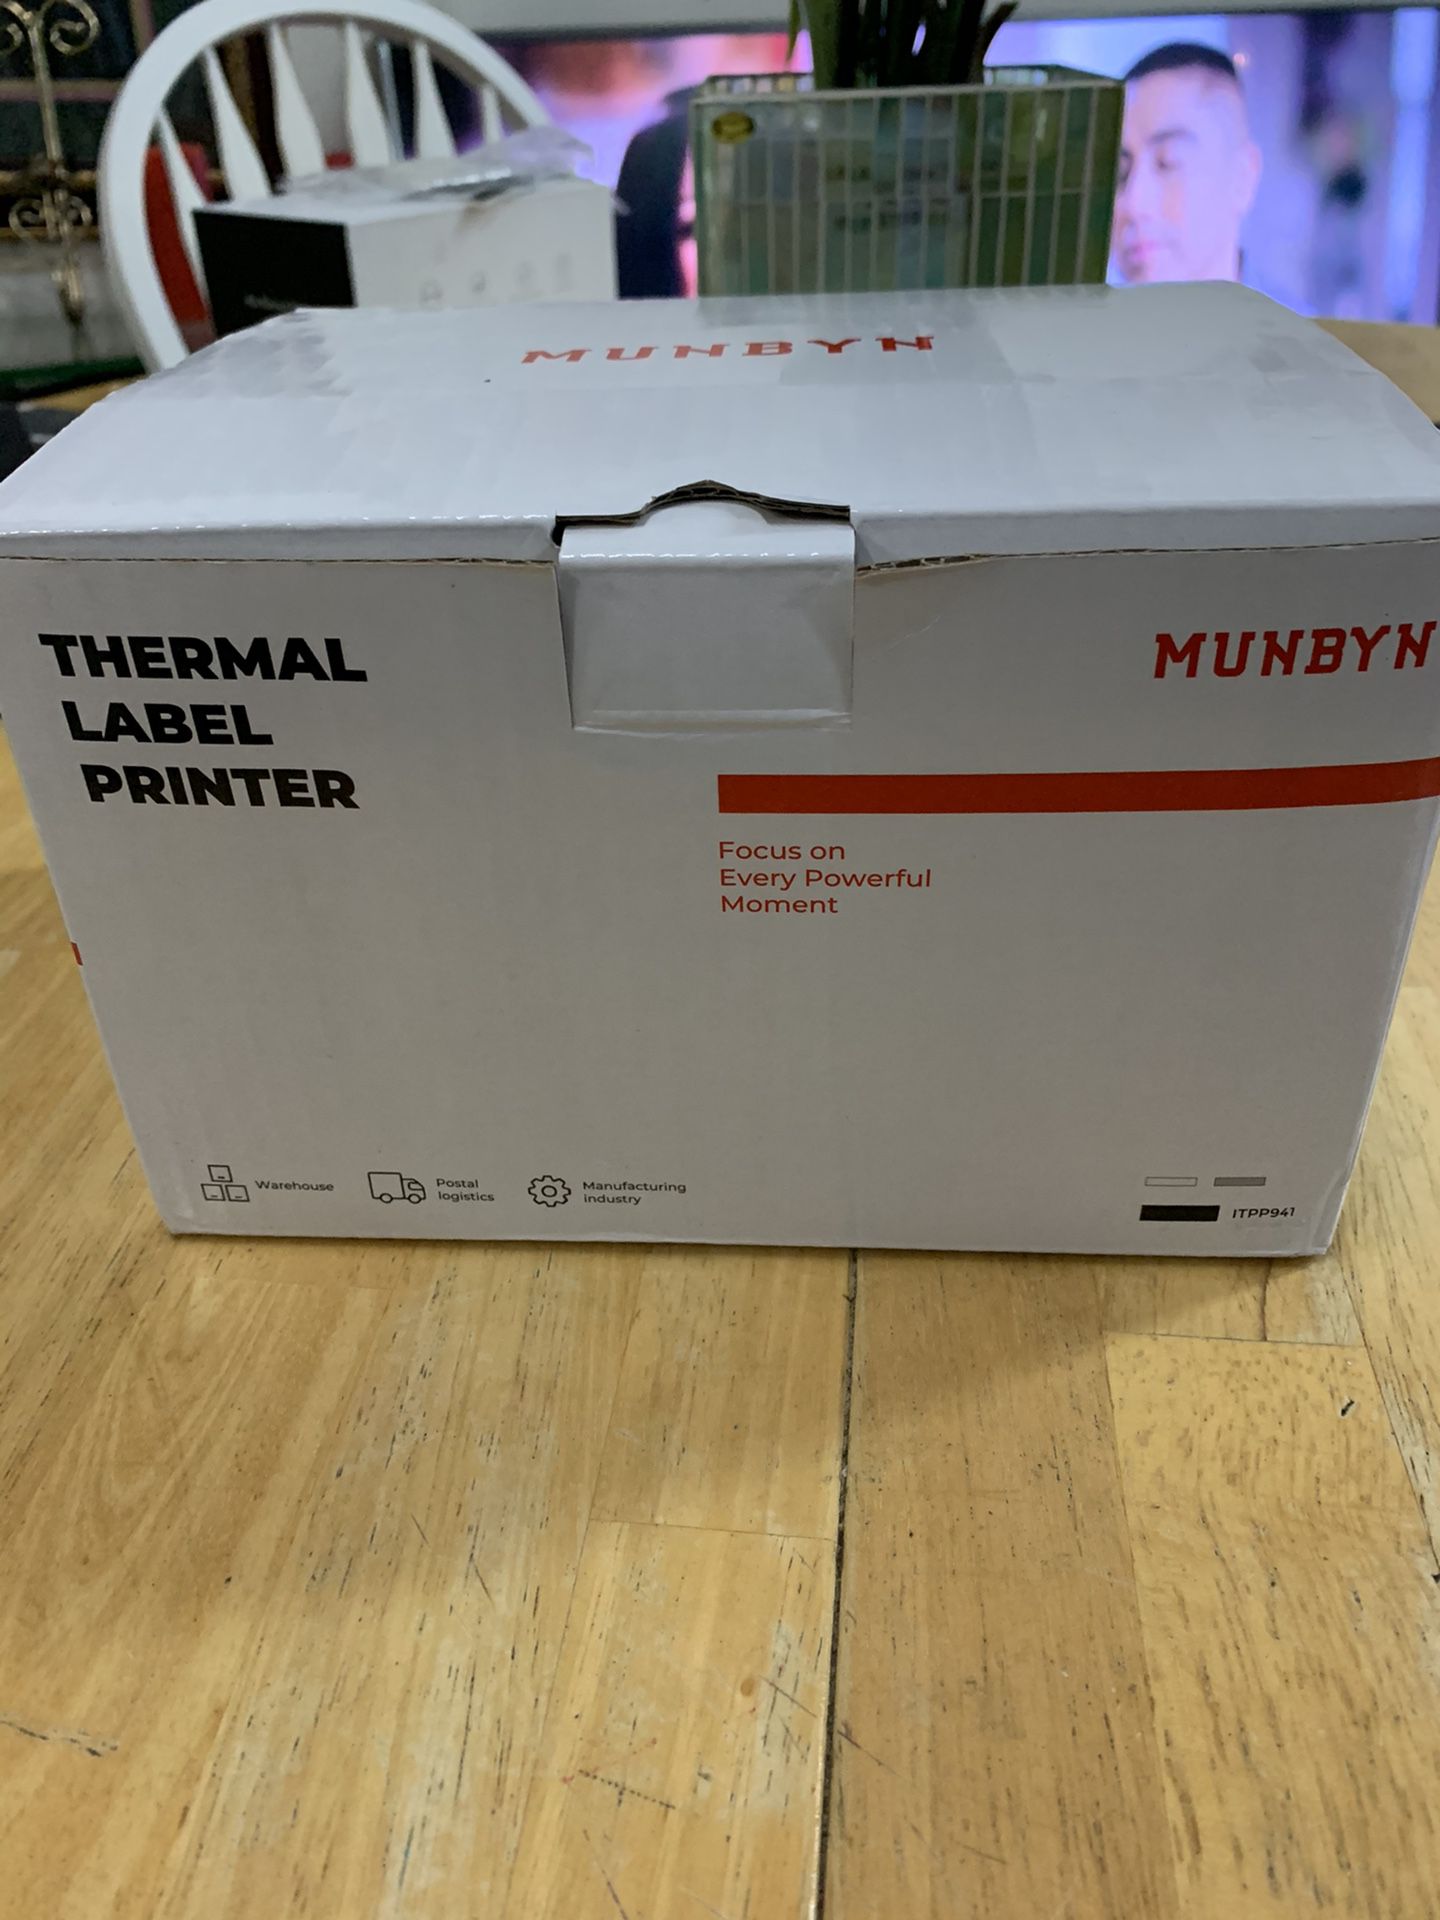 Munbyn Thermal label printer